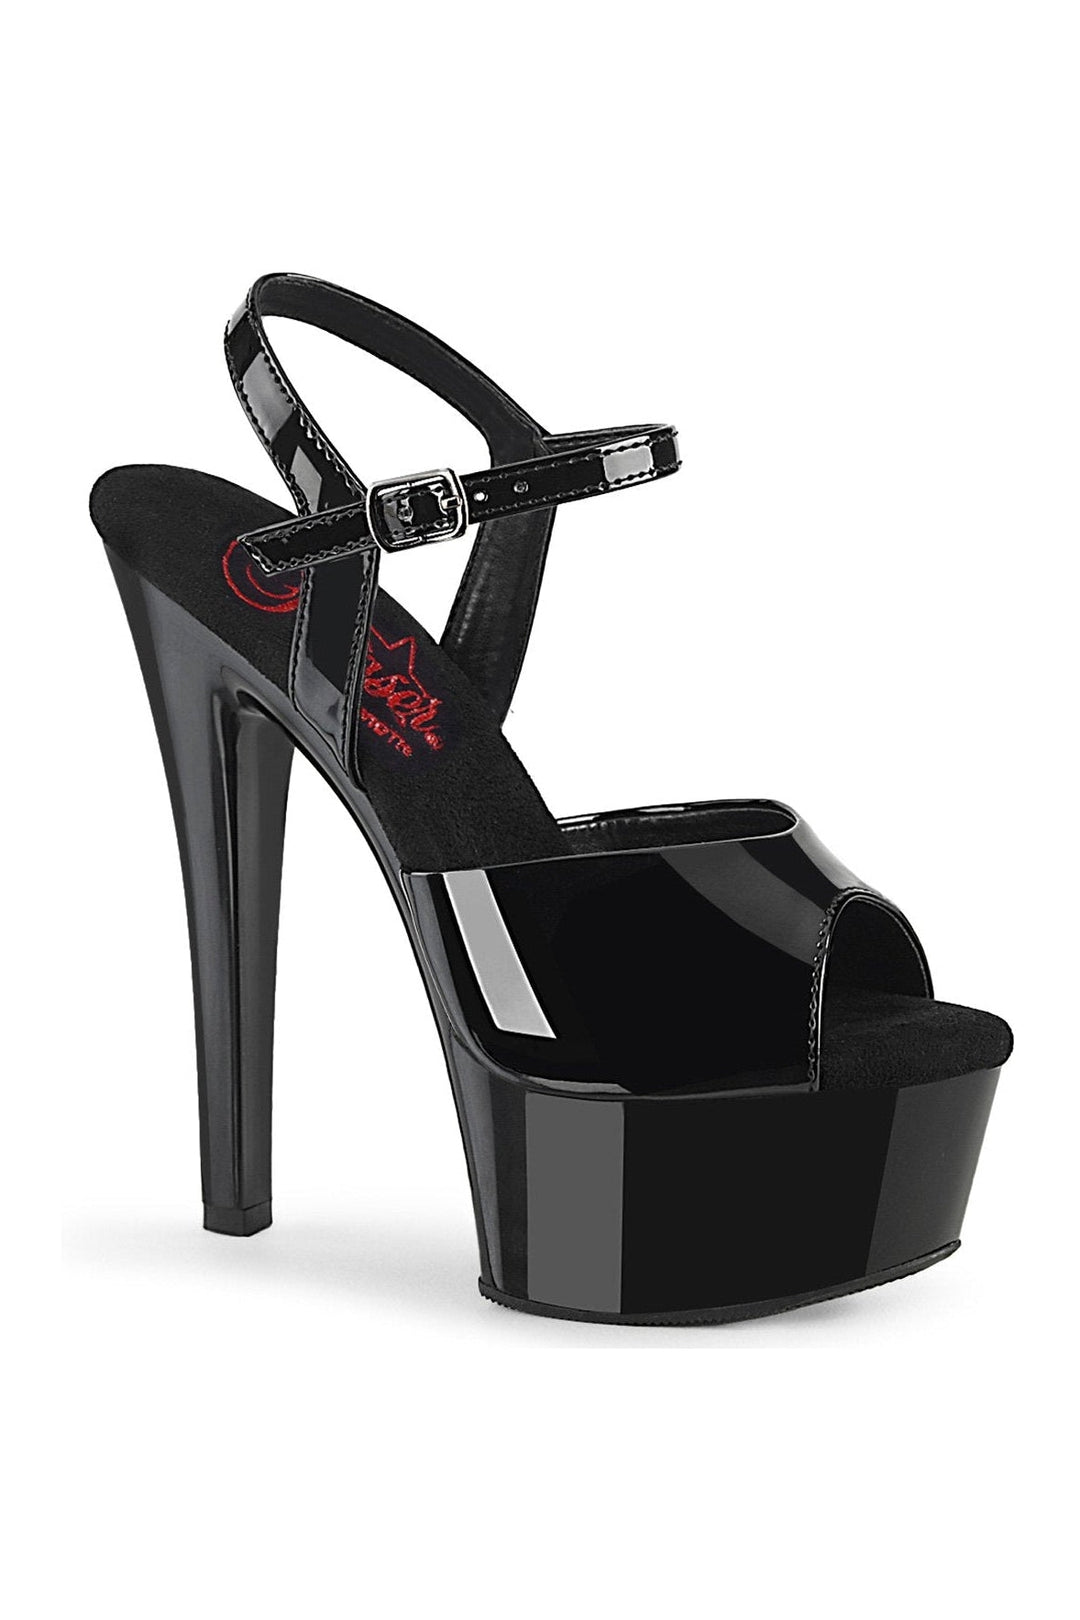 GLEAM-609 Sandal | Black Patent-Sandals-Pleaser-Black-9-Patent-SEXYSHOES.COM